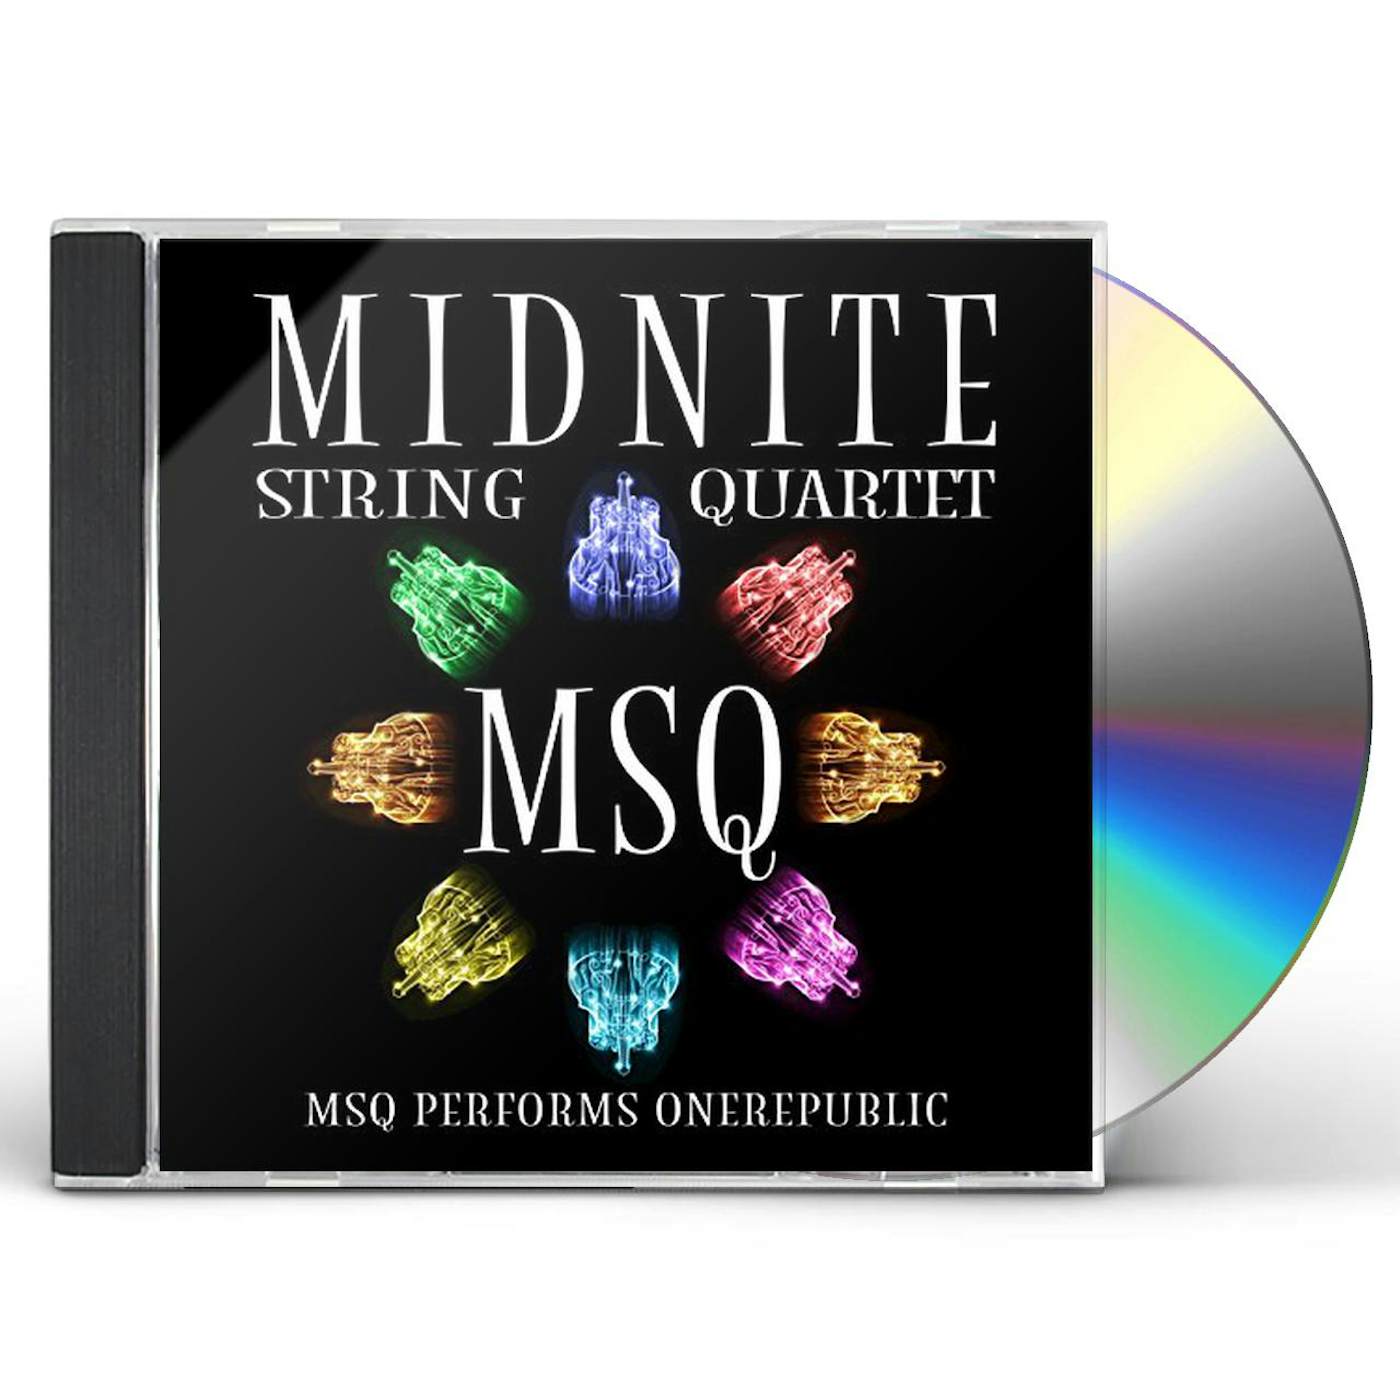 Midnite String Quartet MSQ PERFORMS ONEREPUBLIC (MOD) CD